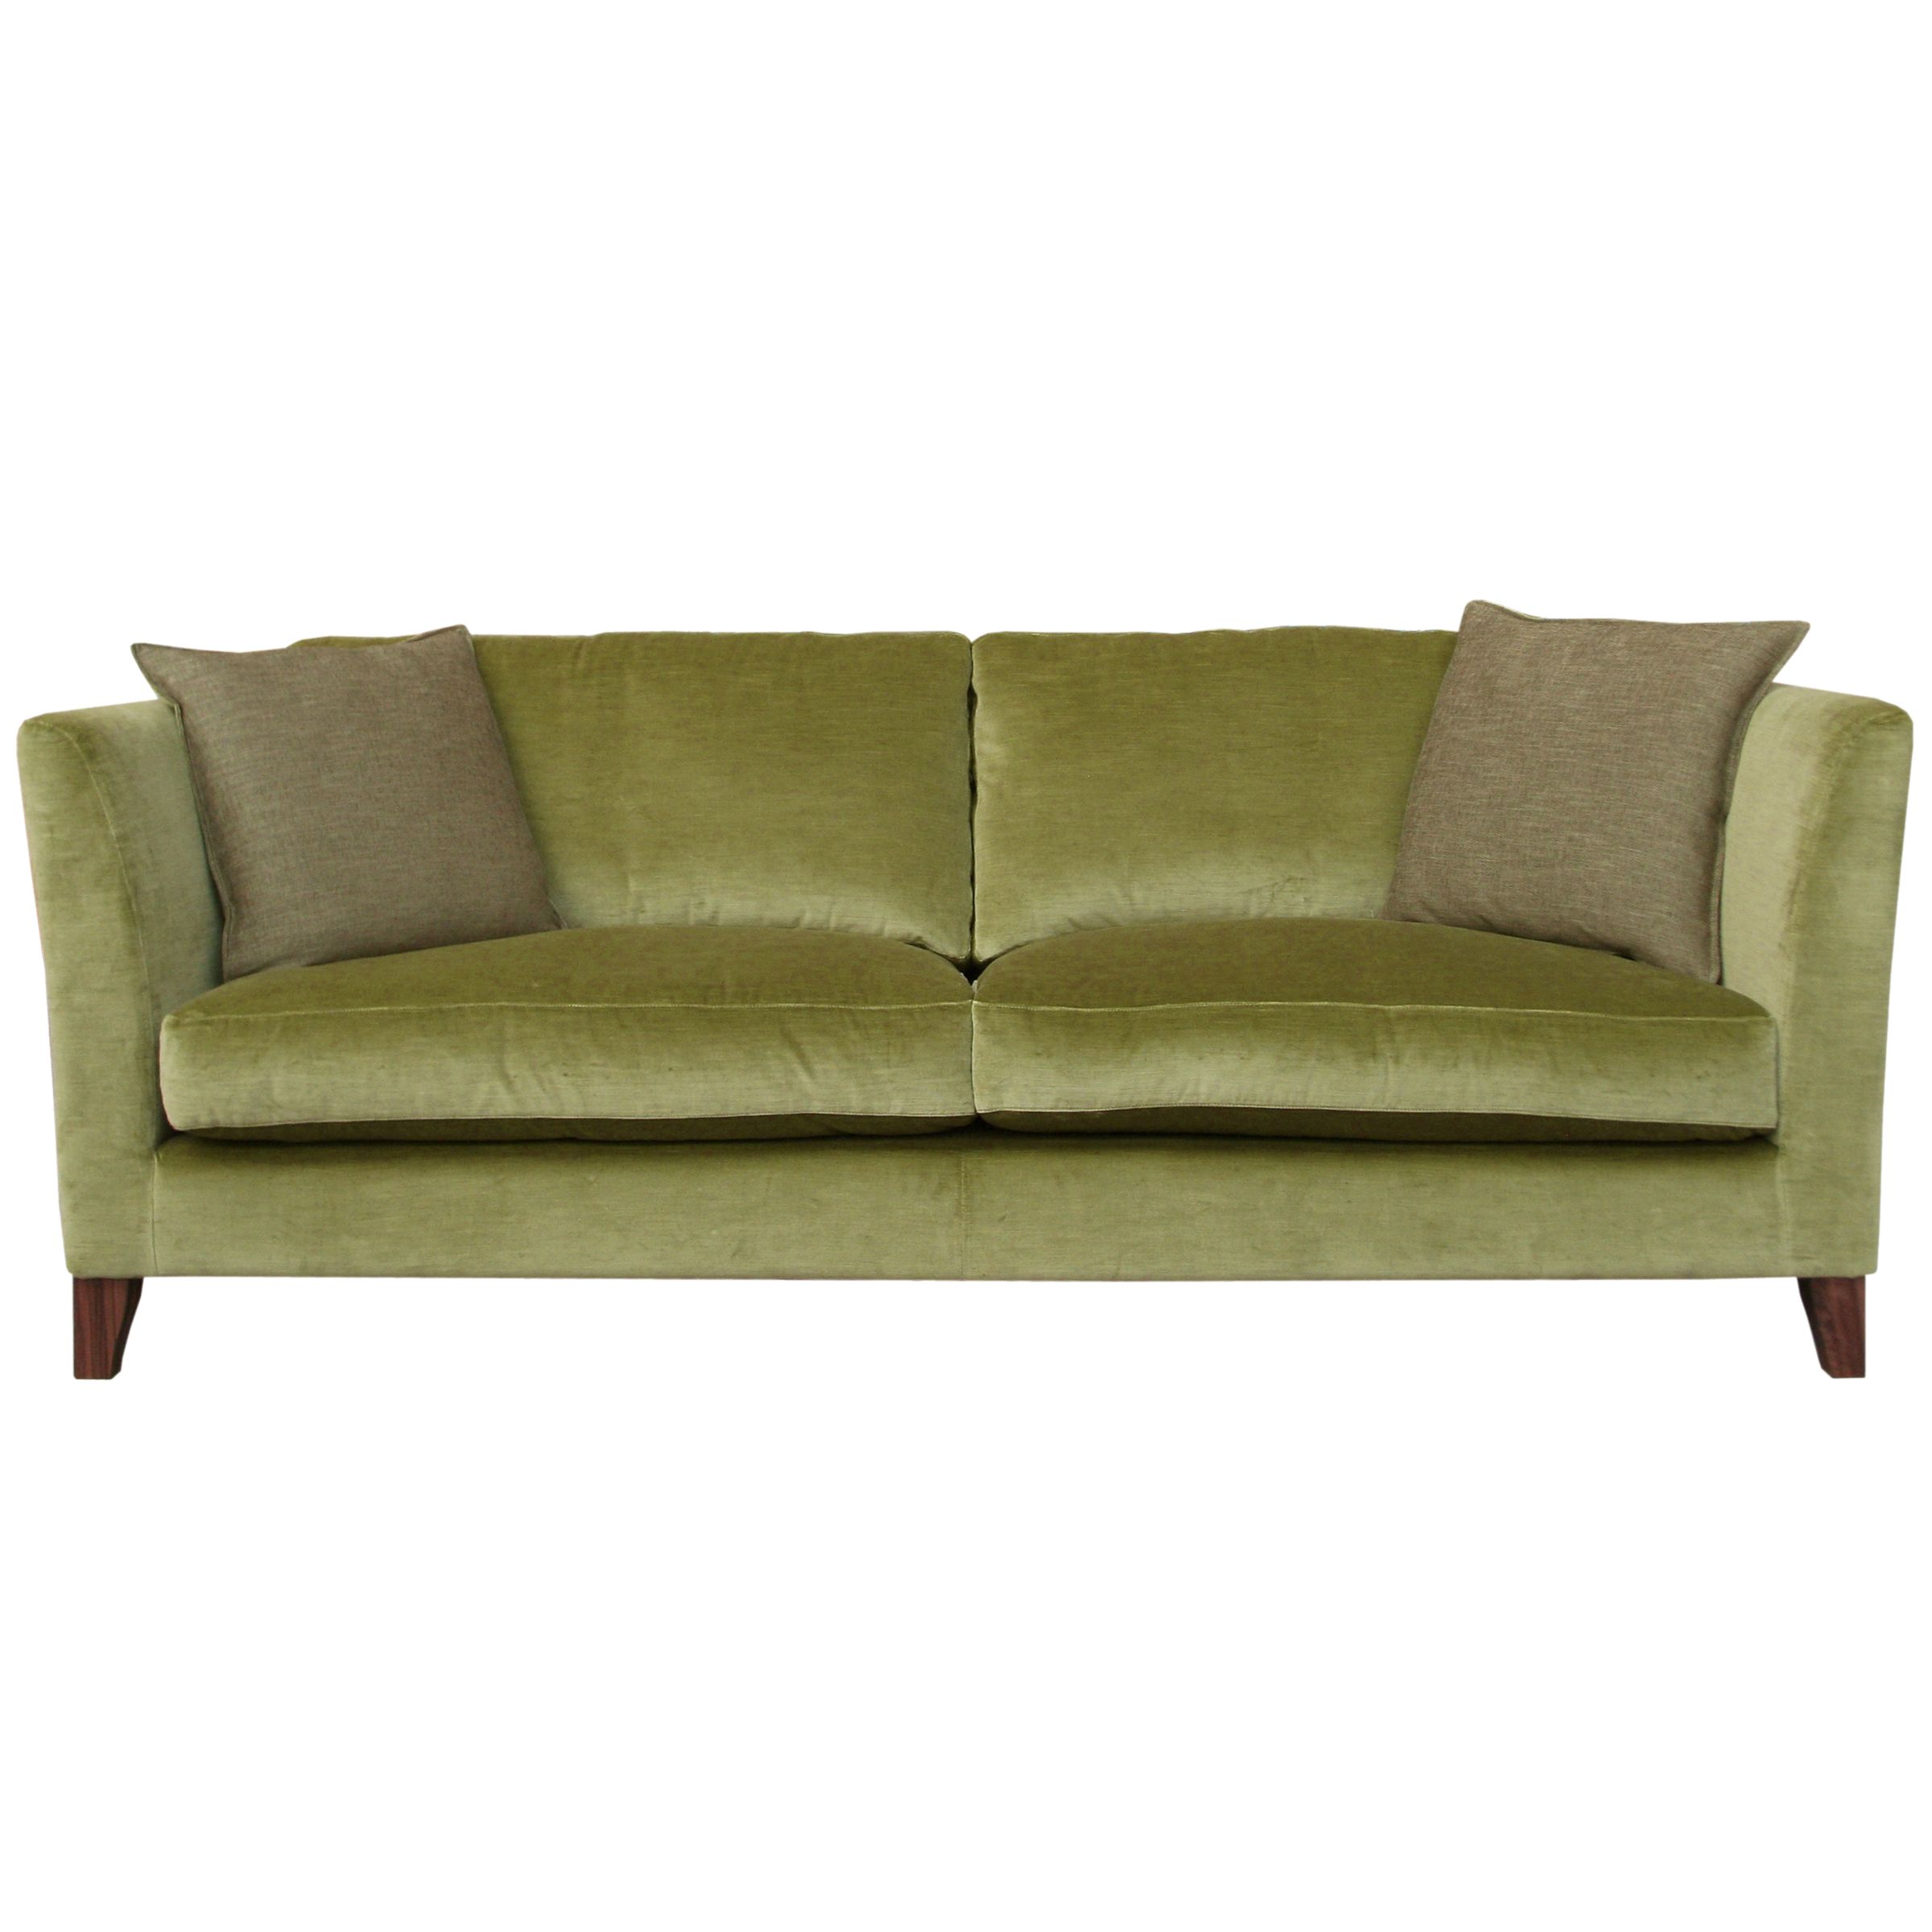 Nick Munro Collection Cushion Back Grand Sofa, Canterbury Velvet, Willow at John Lewis